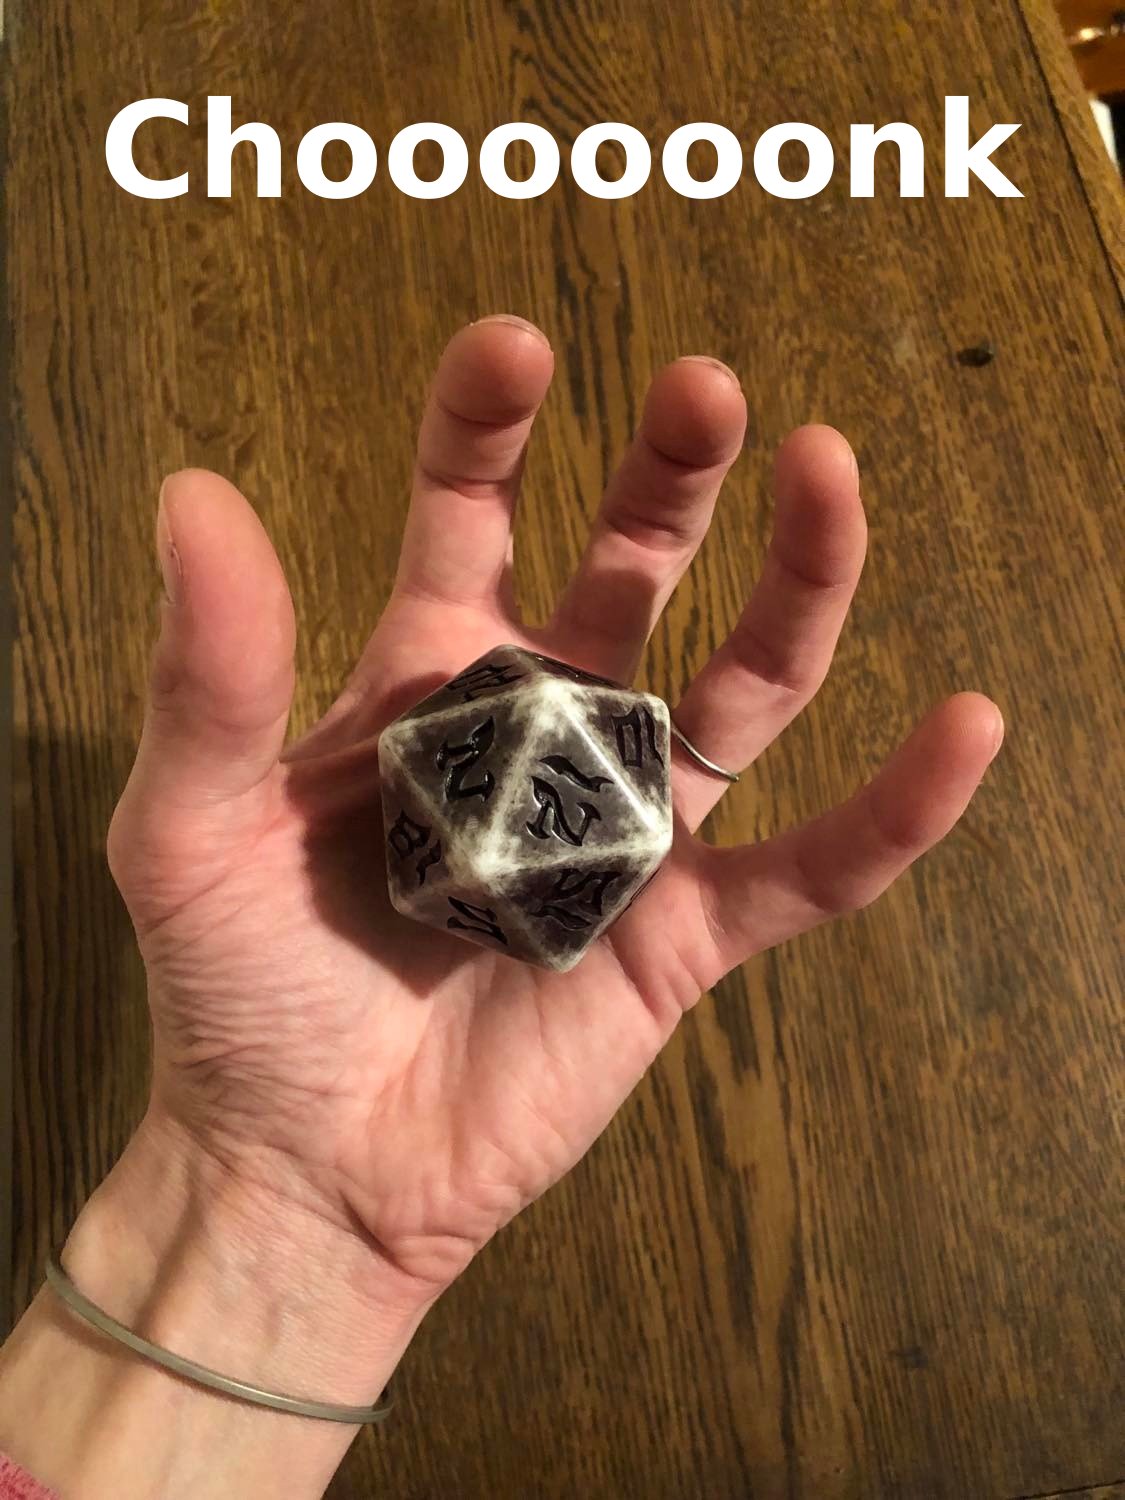 A giant chonk of a dice, chooooooonk